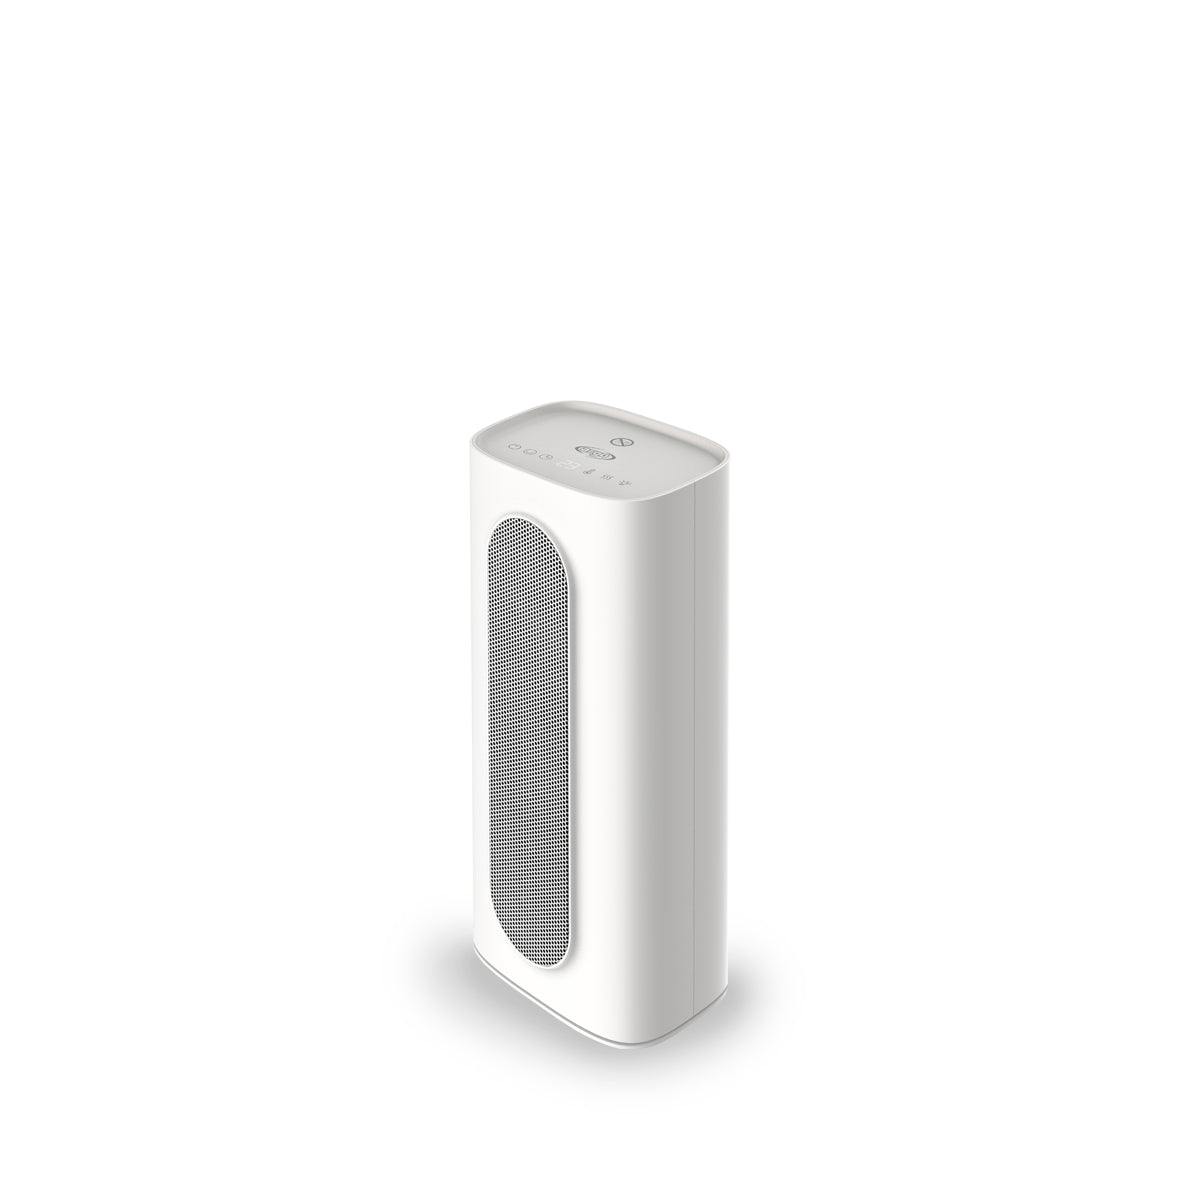 Argo Bobo - Digitale keramische ventilatorkachel